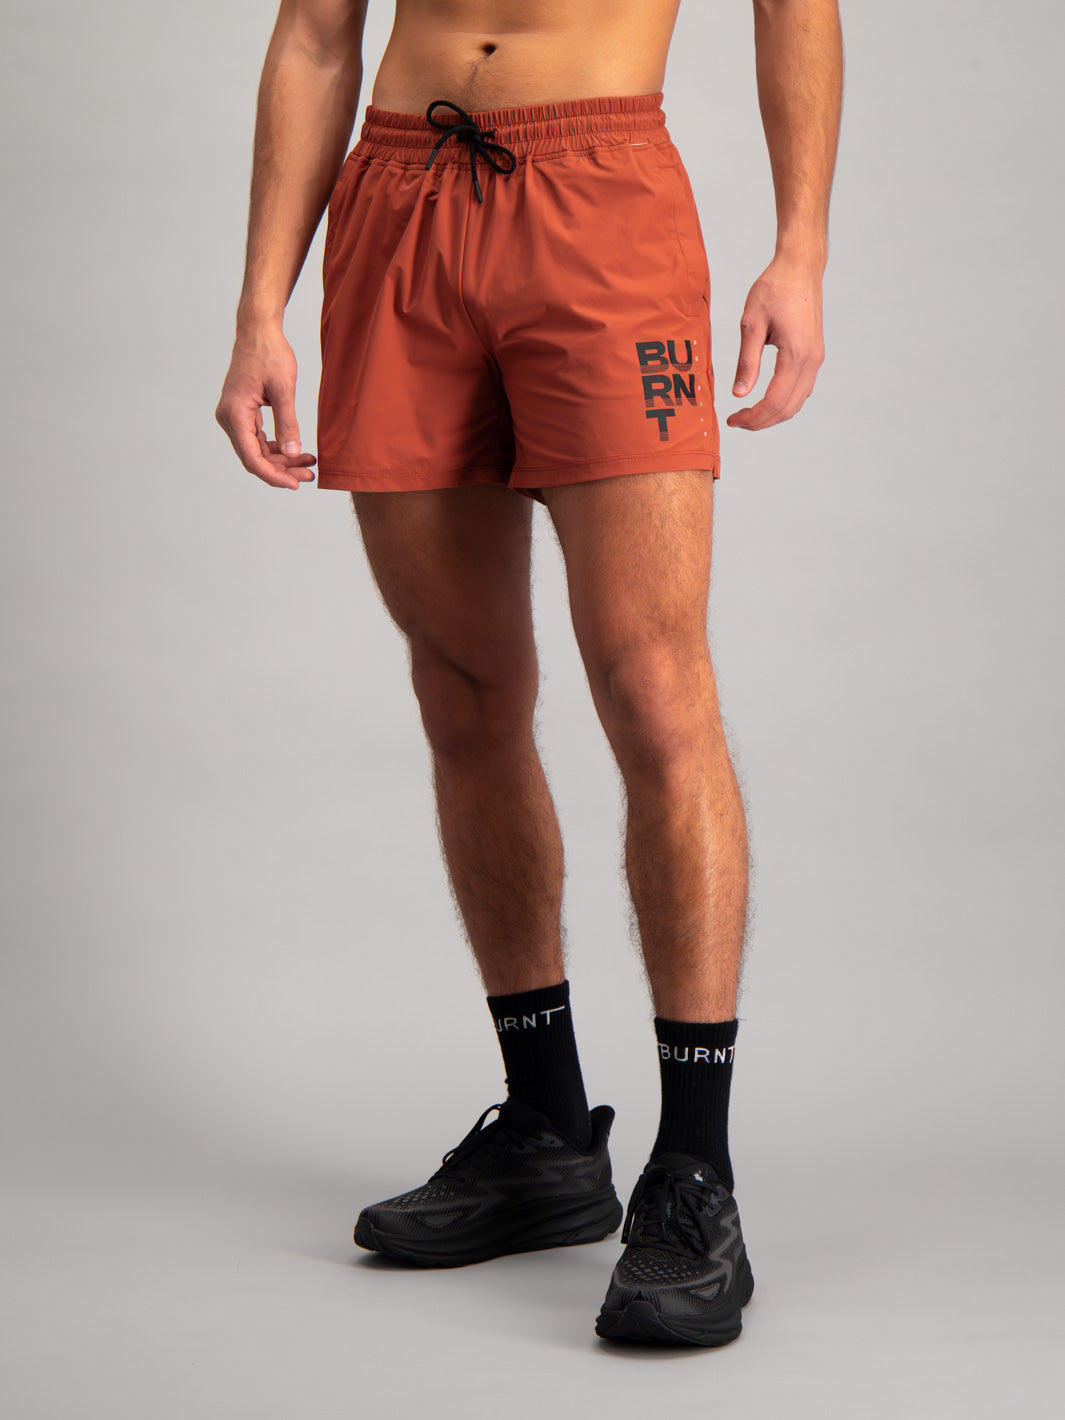 Burnt Studios Activewear 5-inch shorts in core rust front